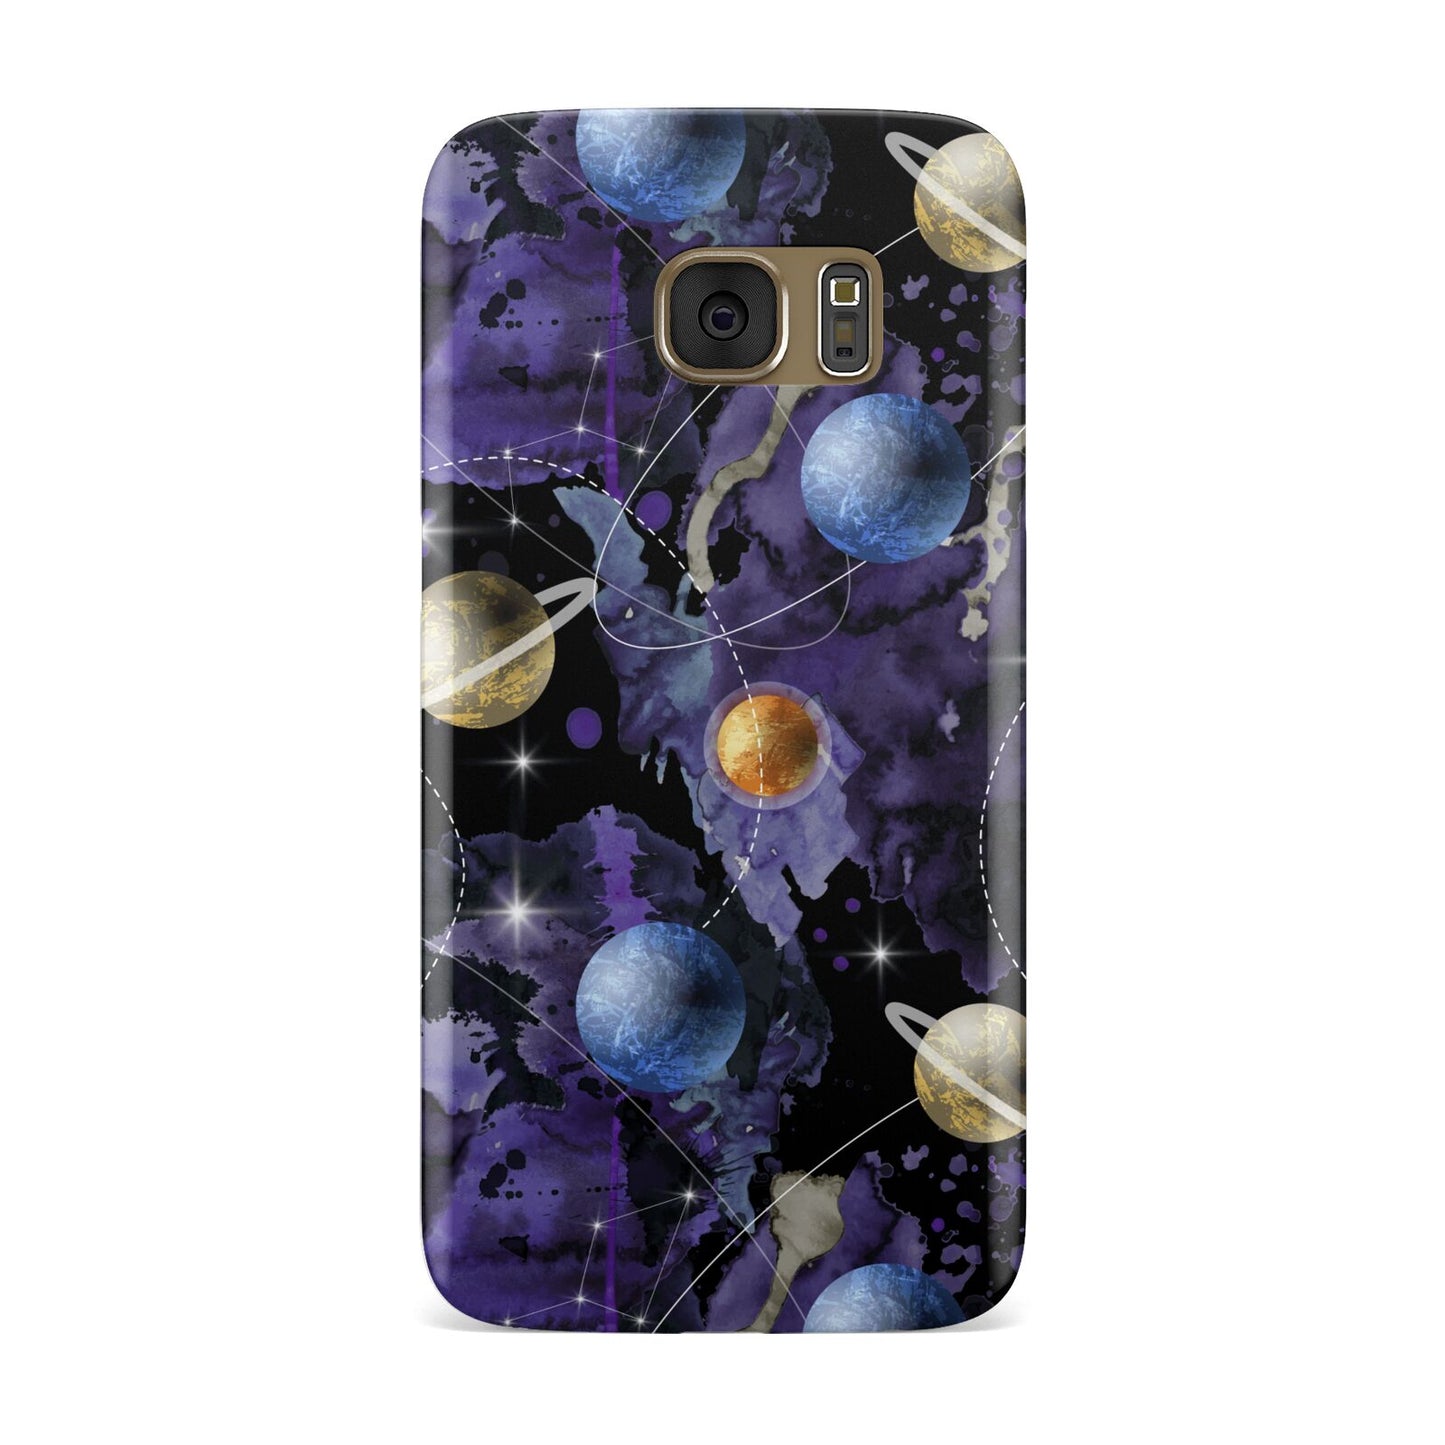 Planet Samsung Galaxy Case